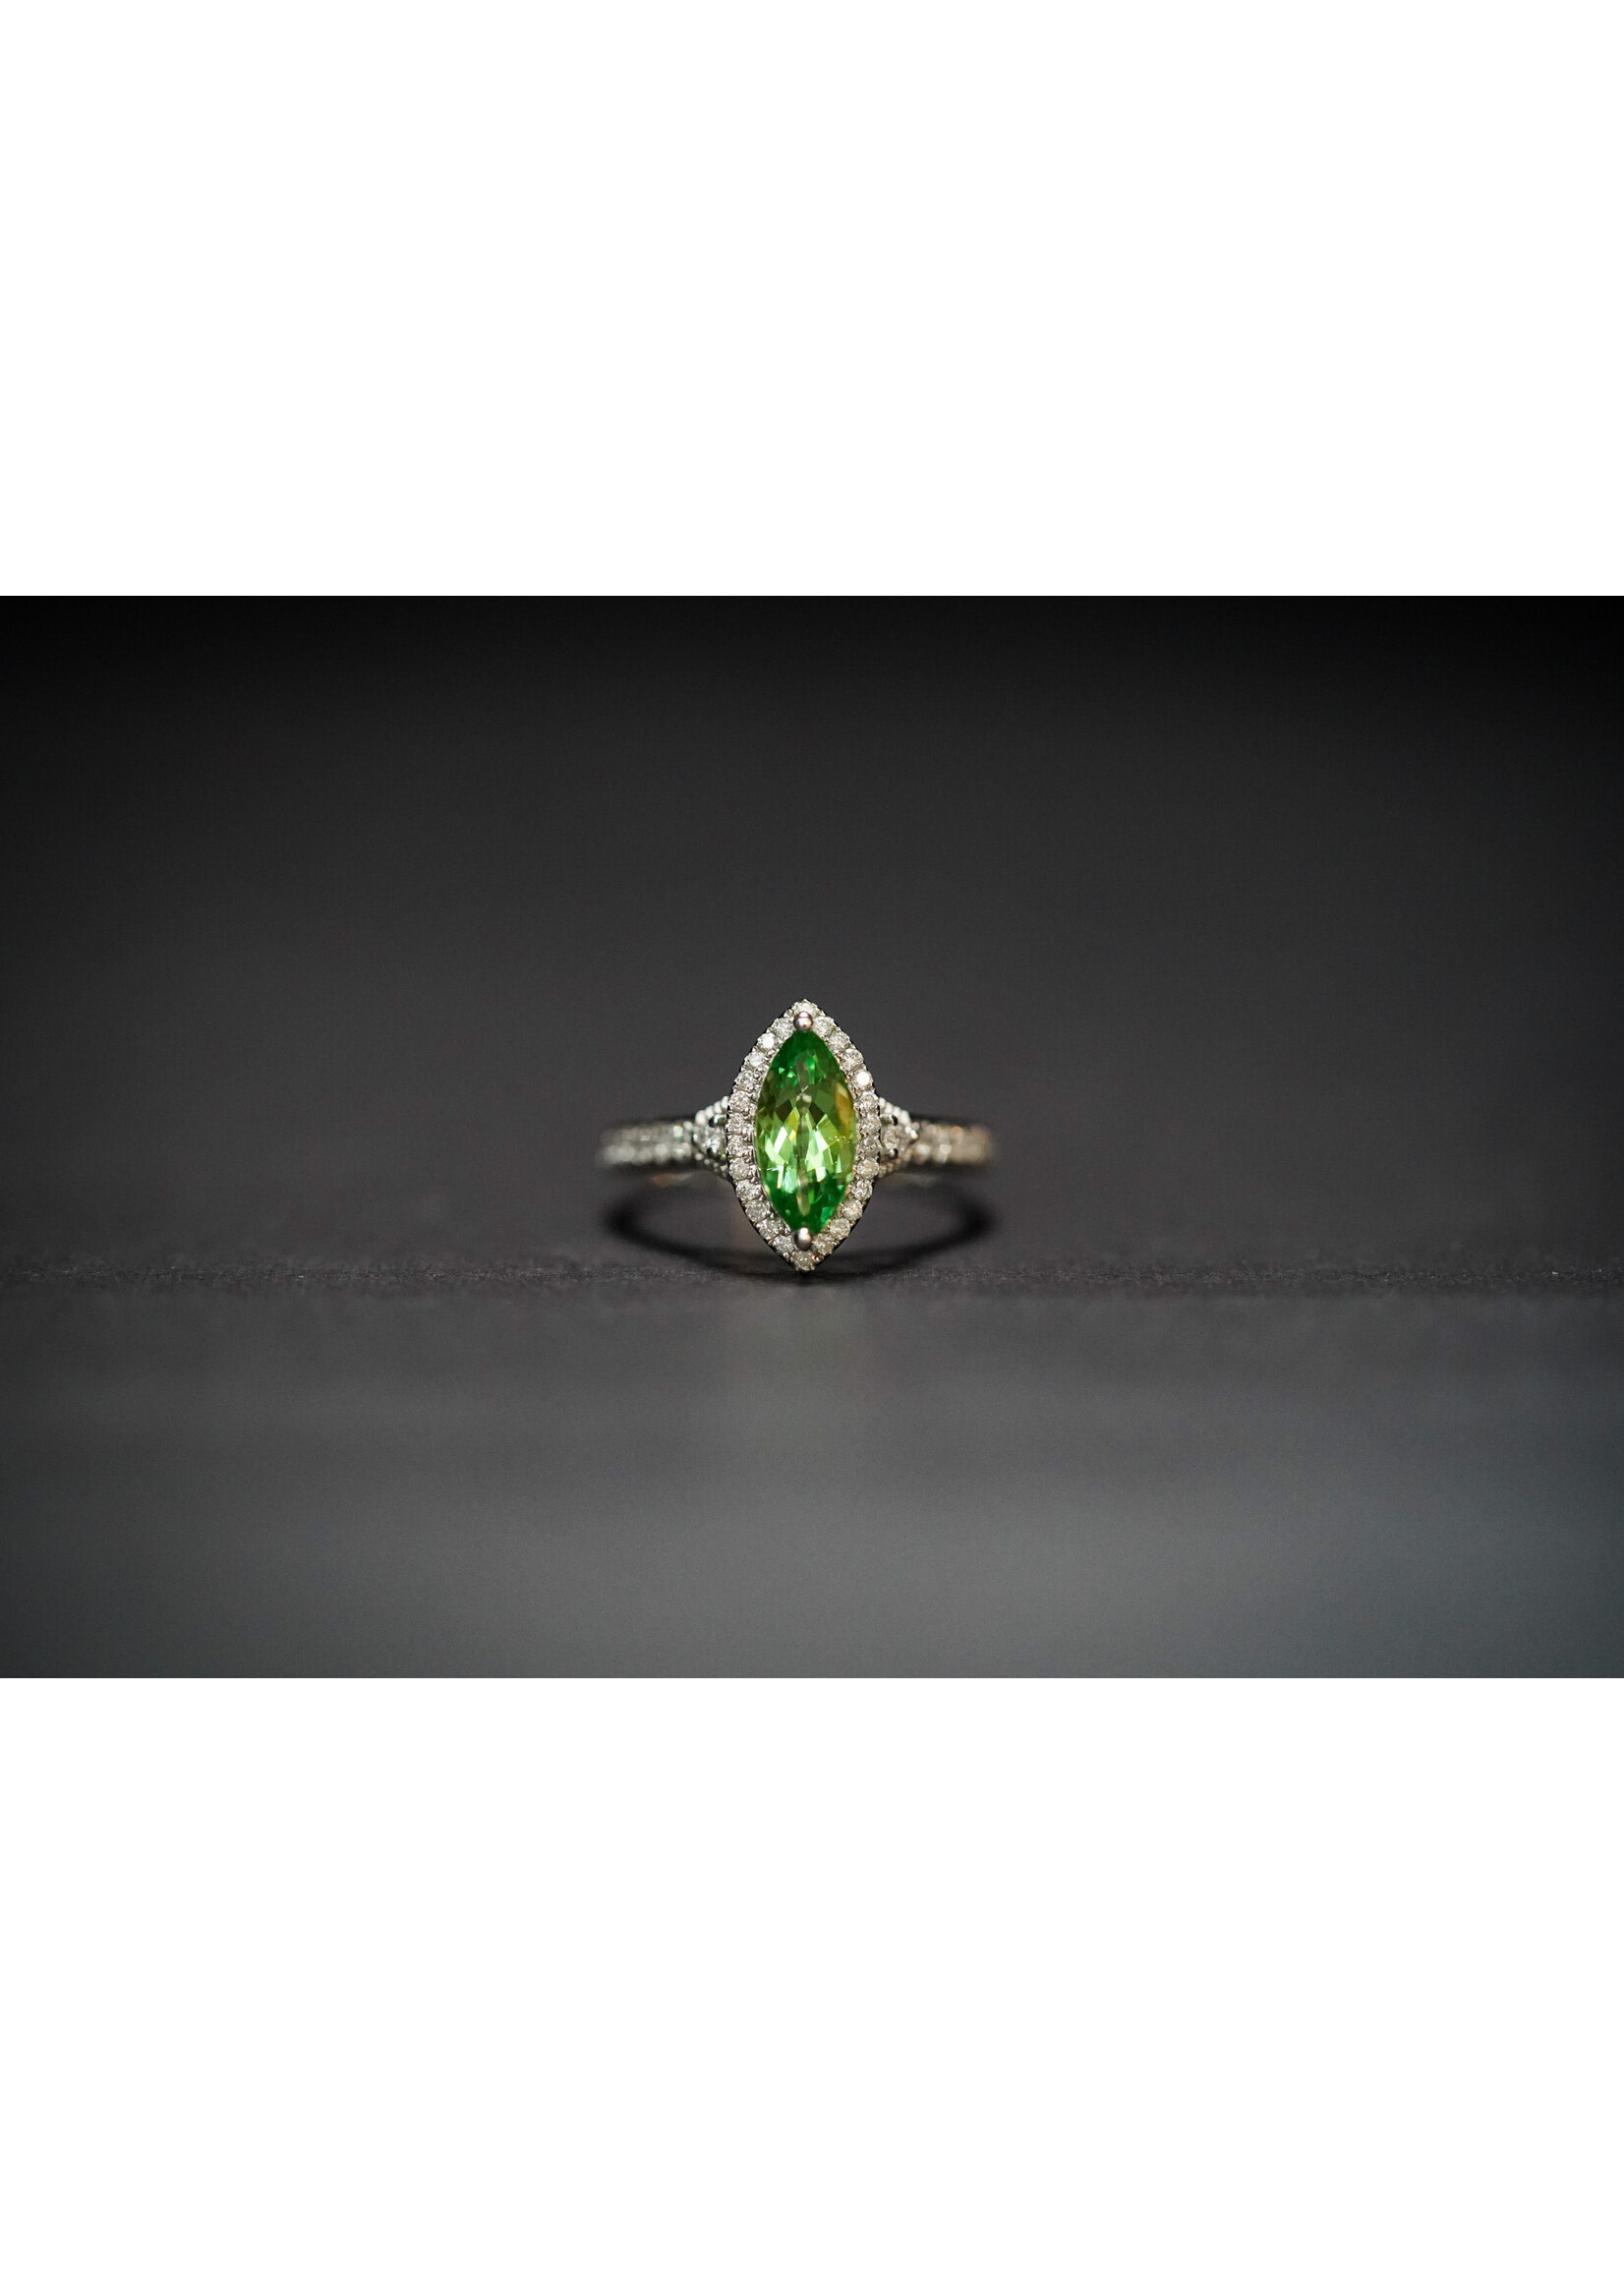 14KW 2.68g 1.71ctw (1.37ctr) Tsavorite Garnet & Diamond Fashion Ring (size 7)